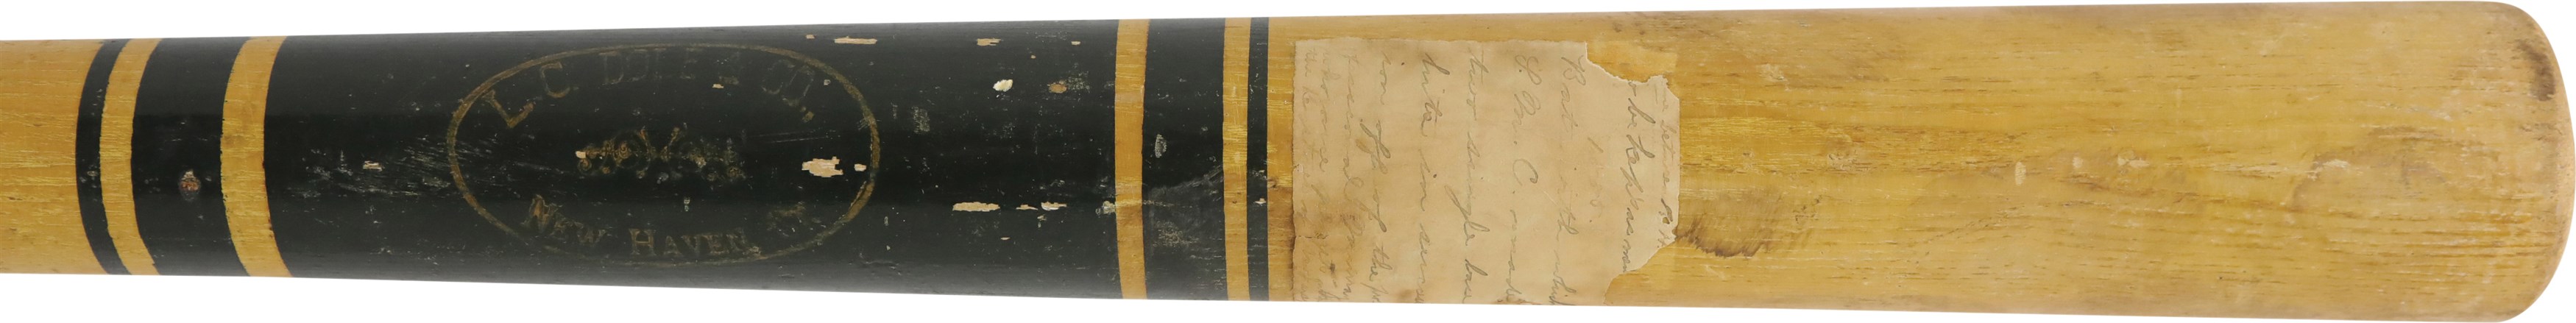 Baseball Memorabilia - 1880s L.C. Dole & Co. Bat Used by Samuel M. Chase